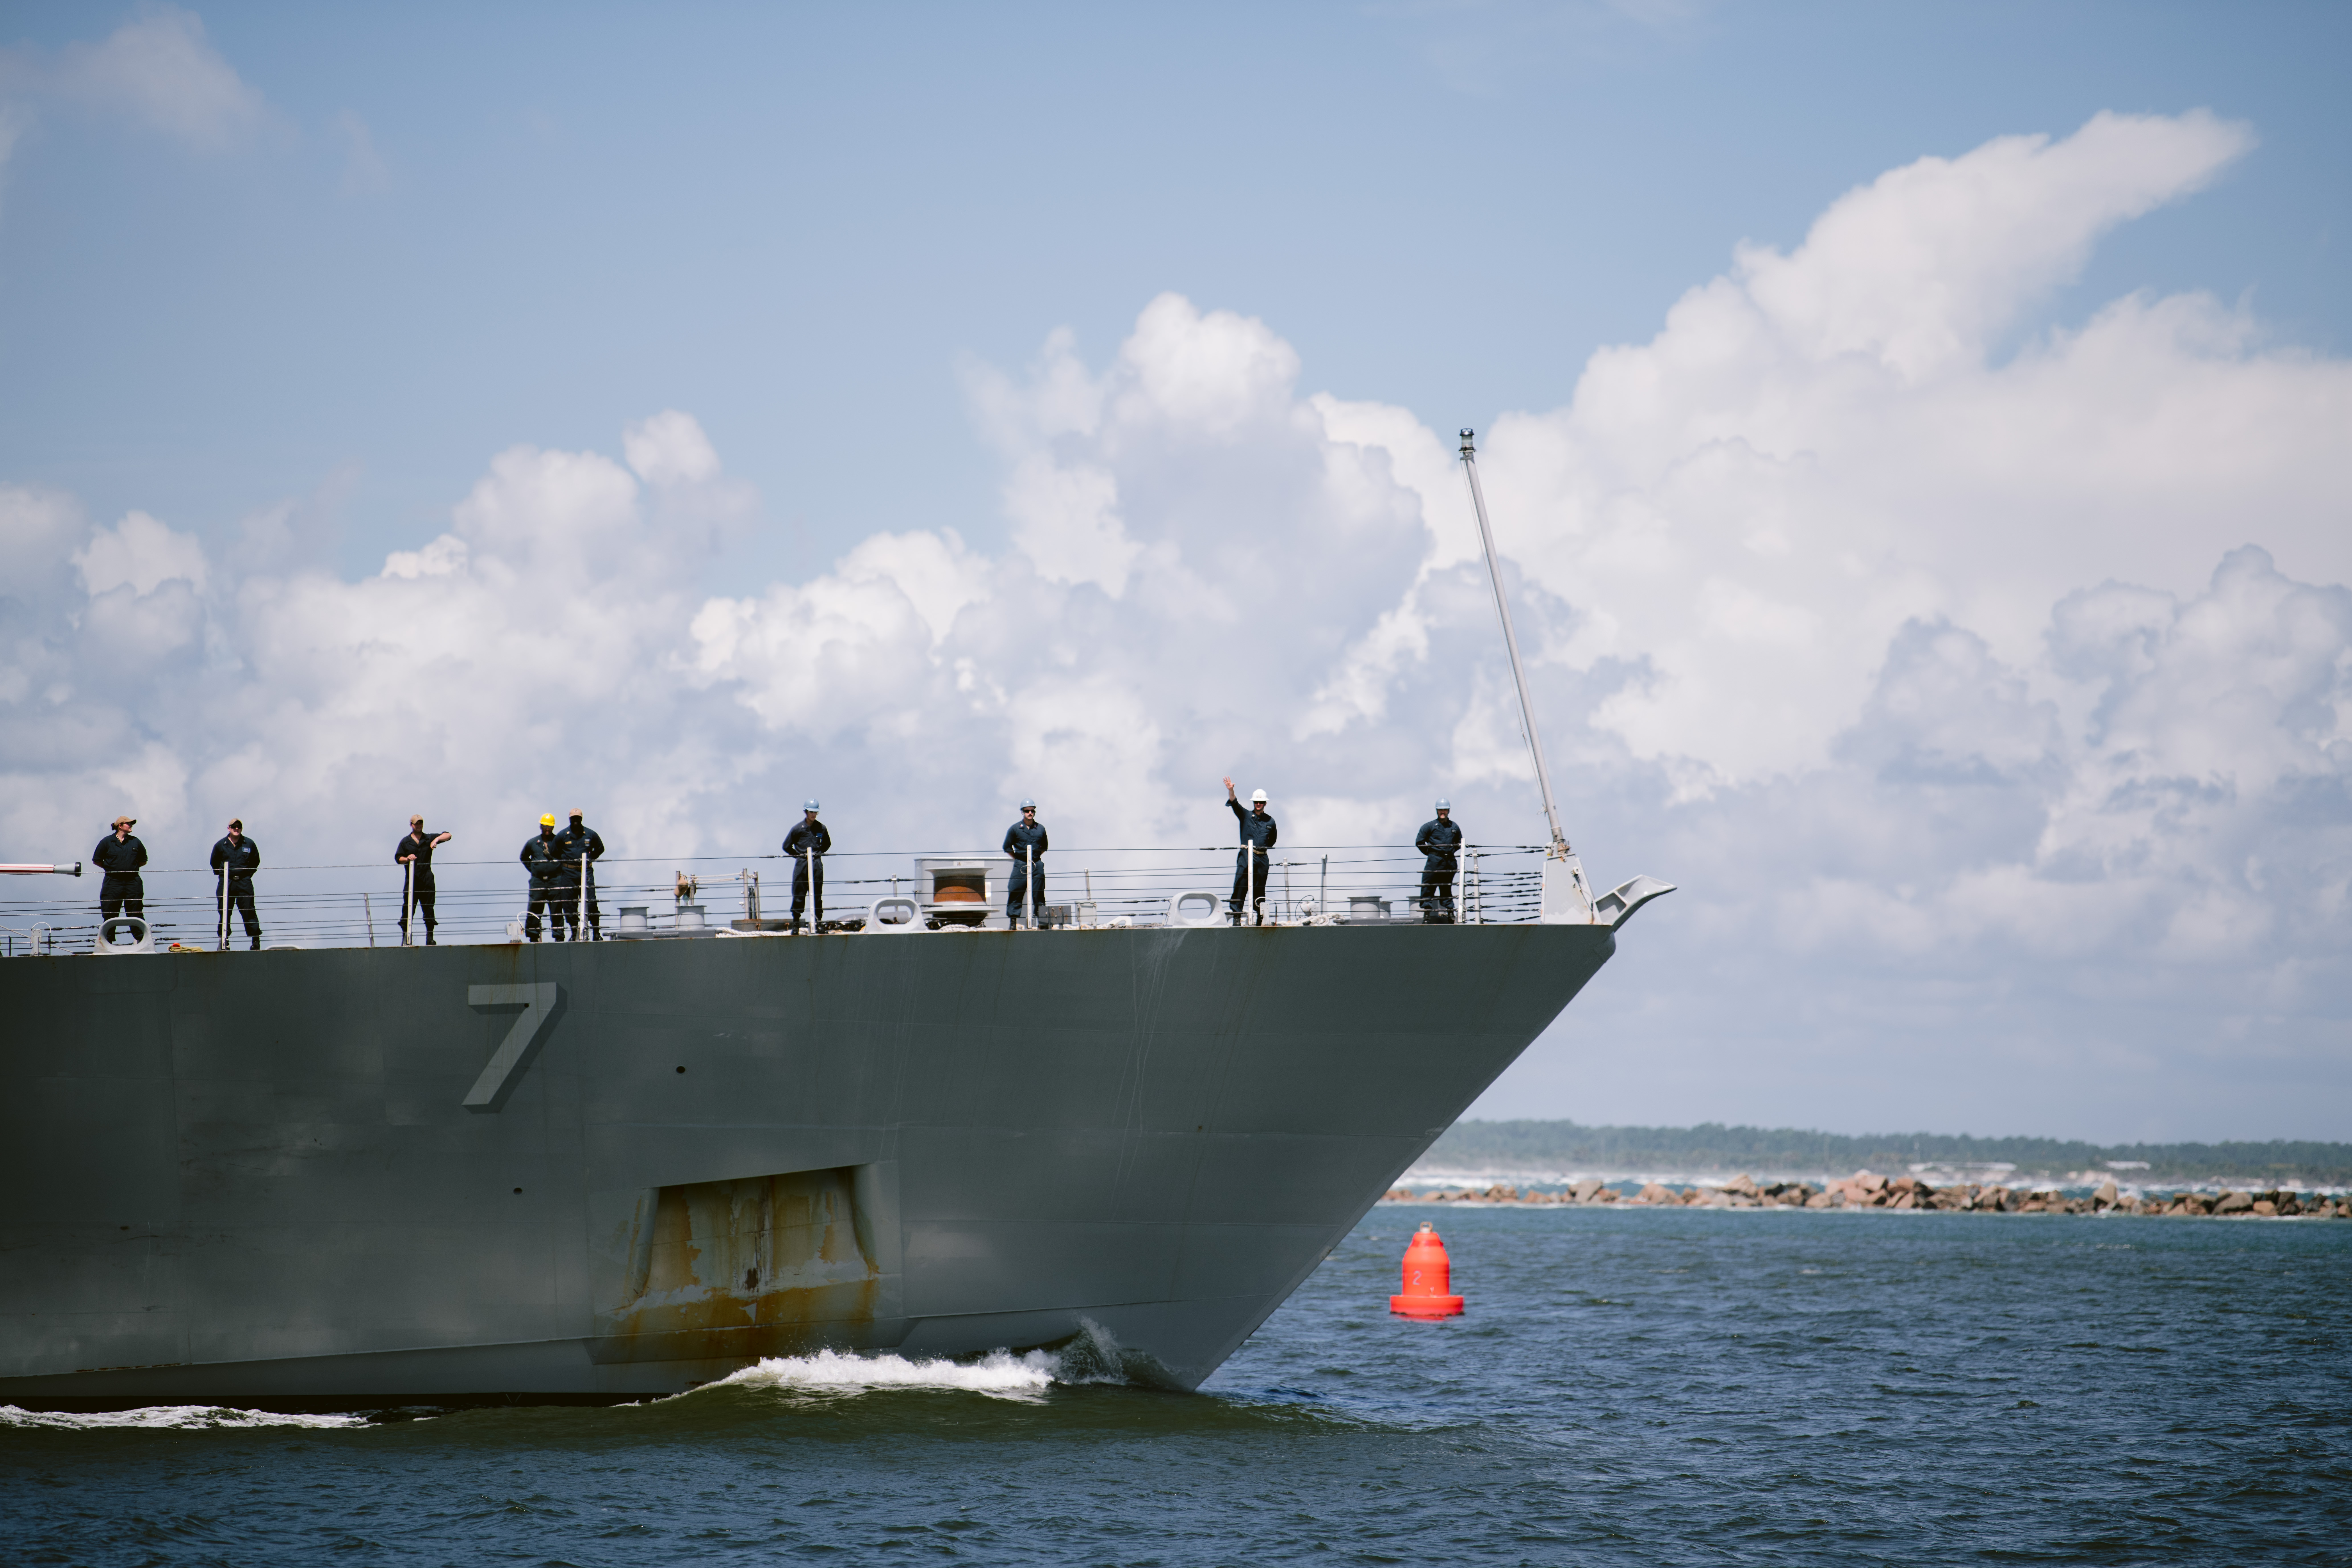 sailor waves farewell during deployment